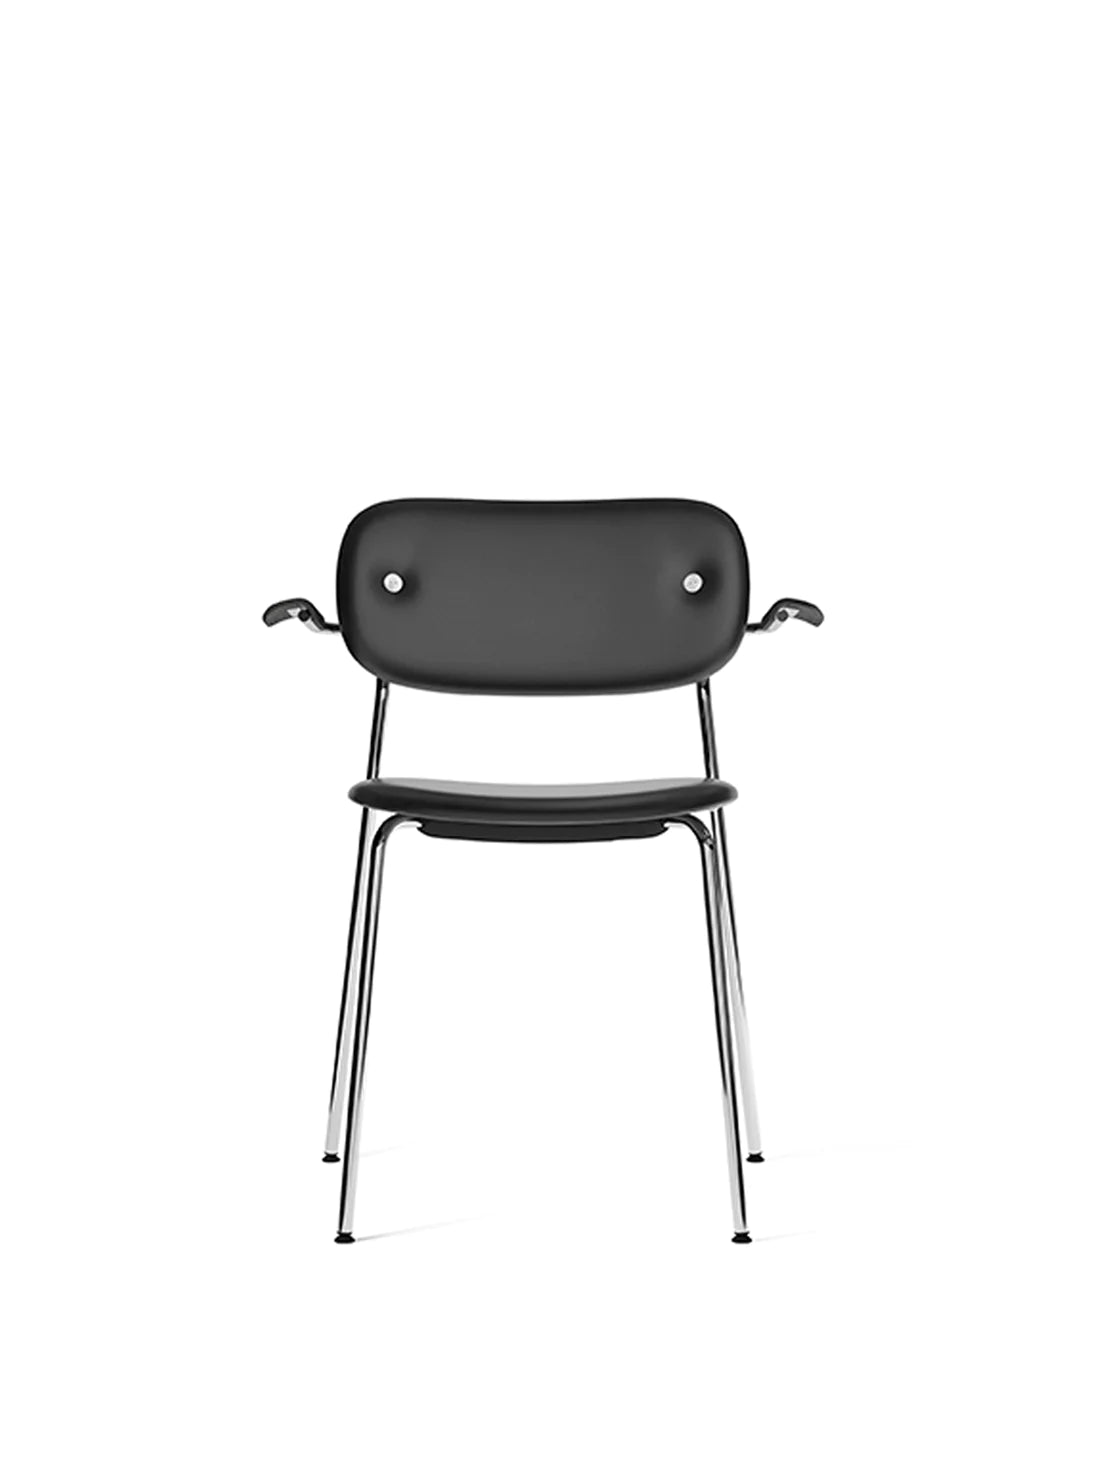 Co Dining Chair, Fully Upholstered With Armrest, Chrome Frame